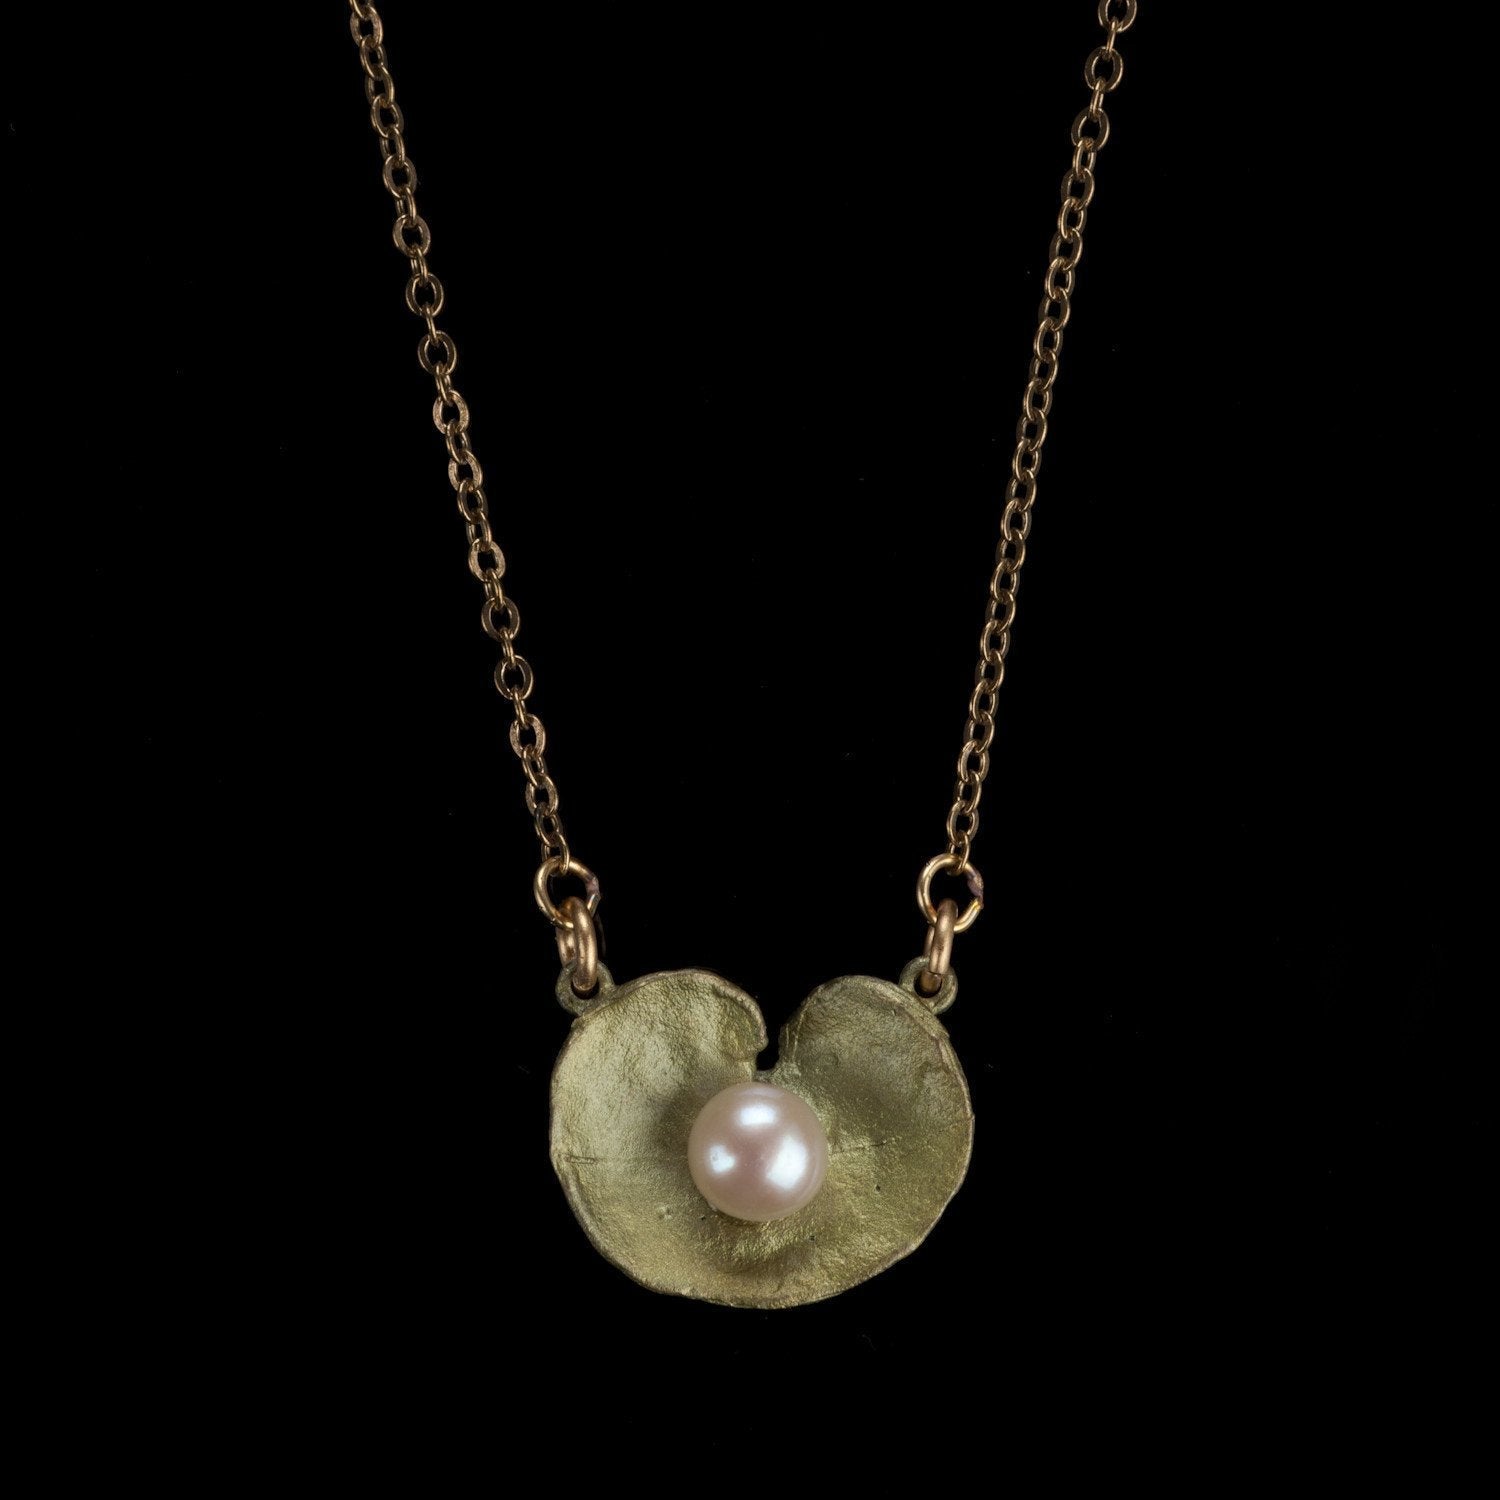 Geranium Pendant - The Nancy Smillie Shop - Art, Jewellery & Designer Gifts Glasgow